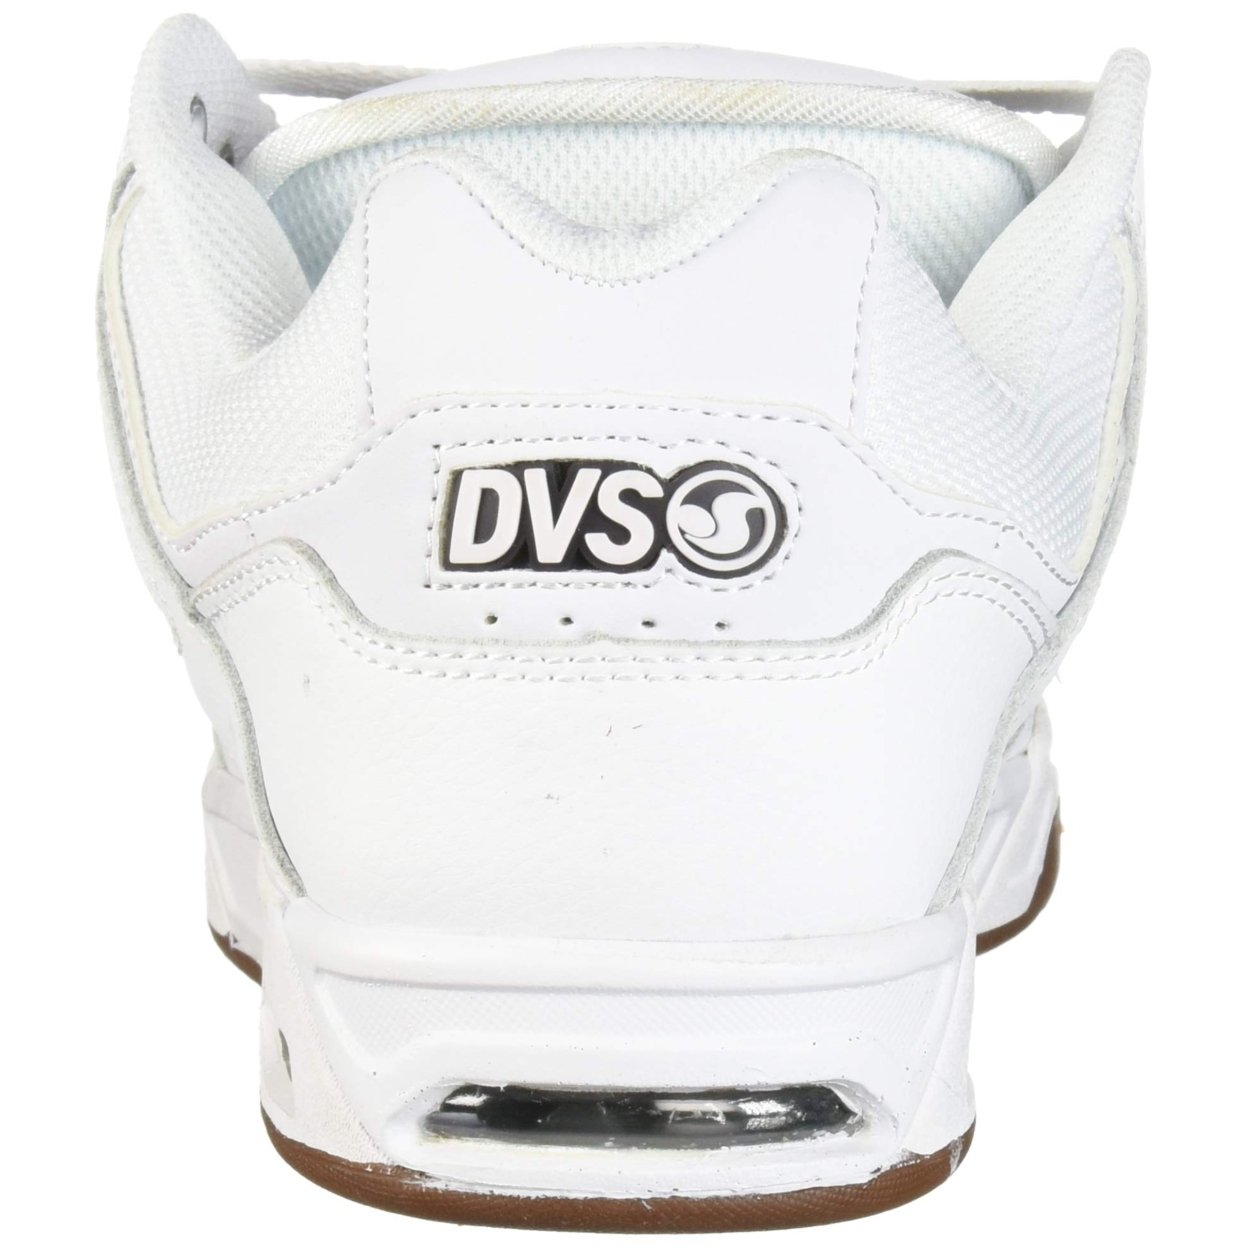 Dvs Footwear Mens Men's Enduro HEIR Skate Shoe WHITE GUM NUBUCK - WHITE GUM NUBUCK, 8-M